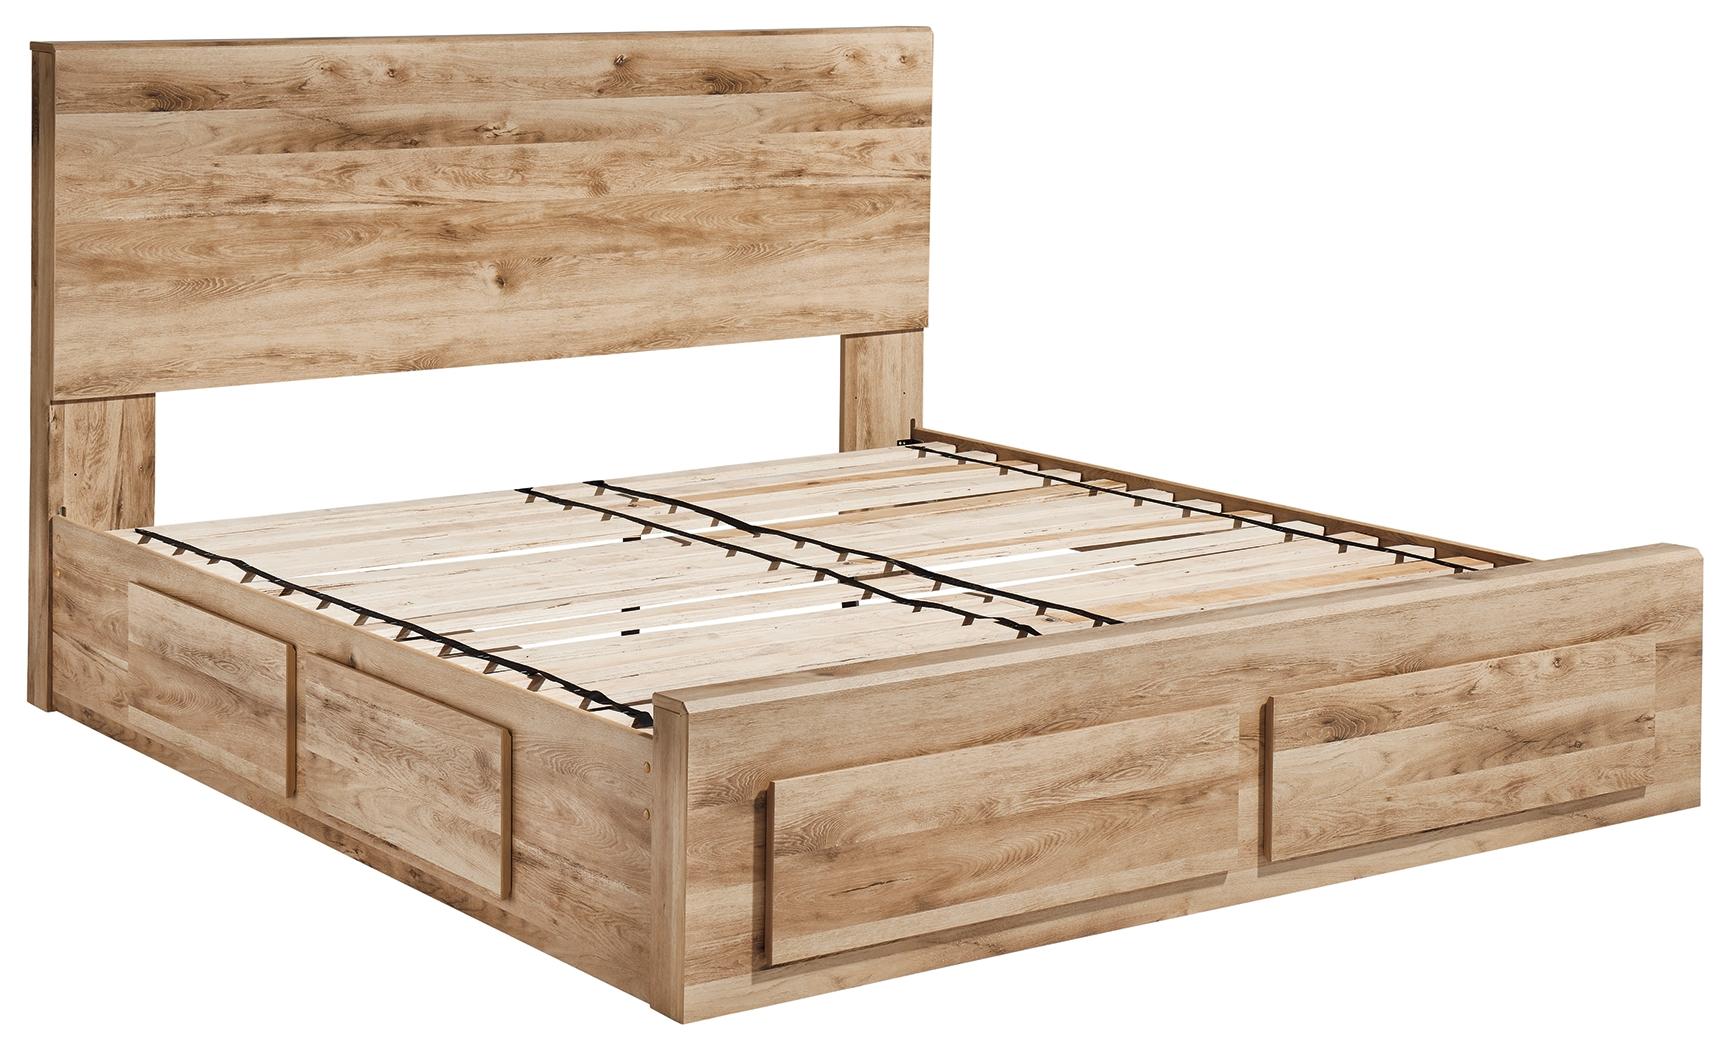 ASHLEY FURNITURE B1050B13 Hyanna King Panel Storage Bed With 2 Under Bed Storage Drawer